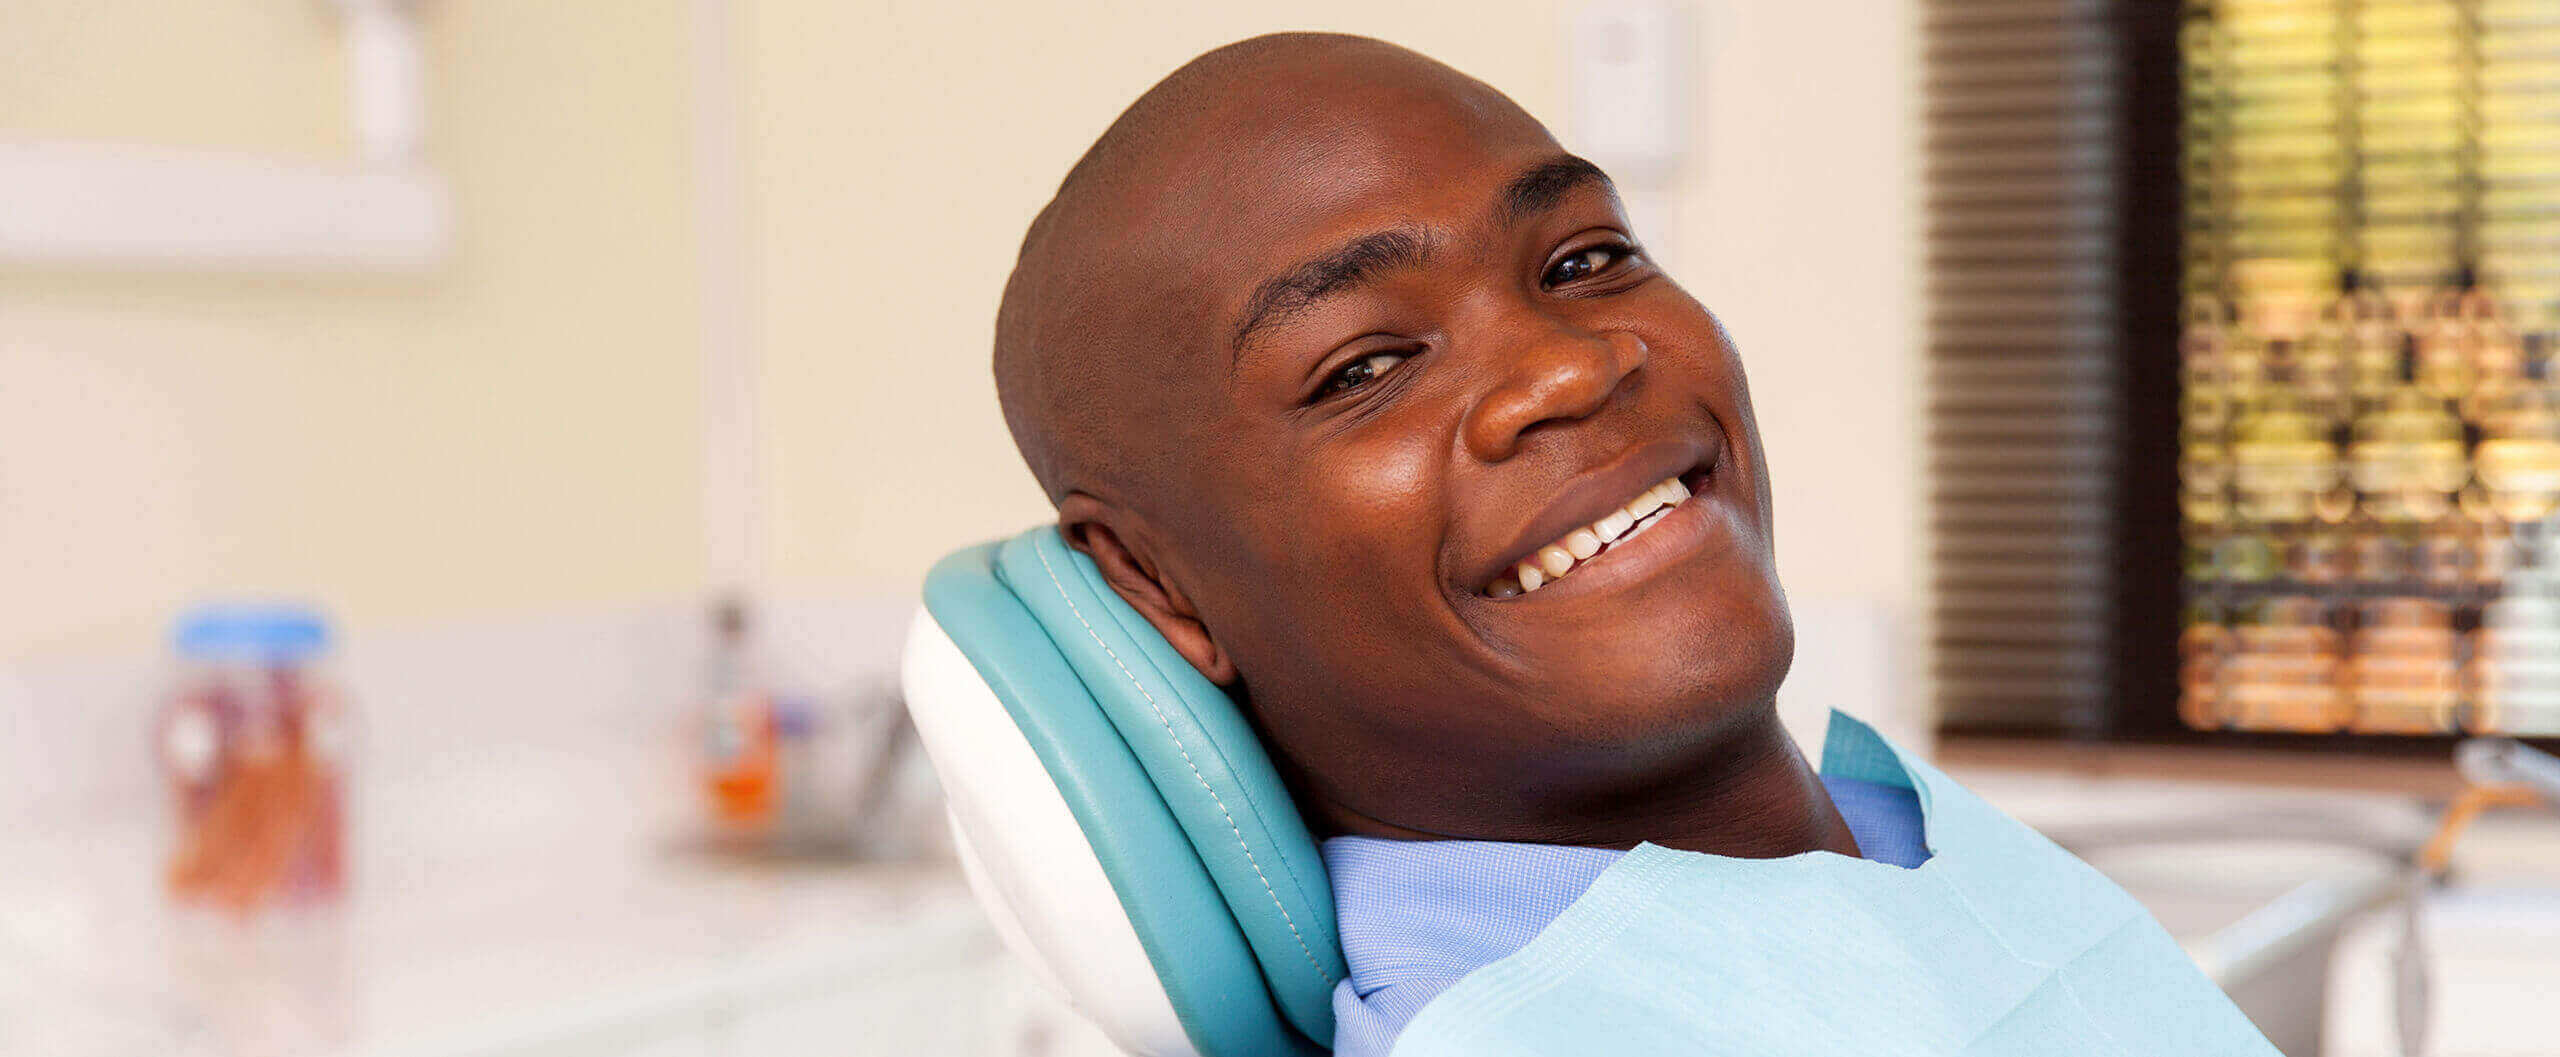 Leesburg Dental Office - smiling man sitting in a dental chair Leesburg Family Dental dentist in Leesburg, Virginia Dr. Ali Mualla